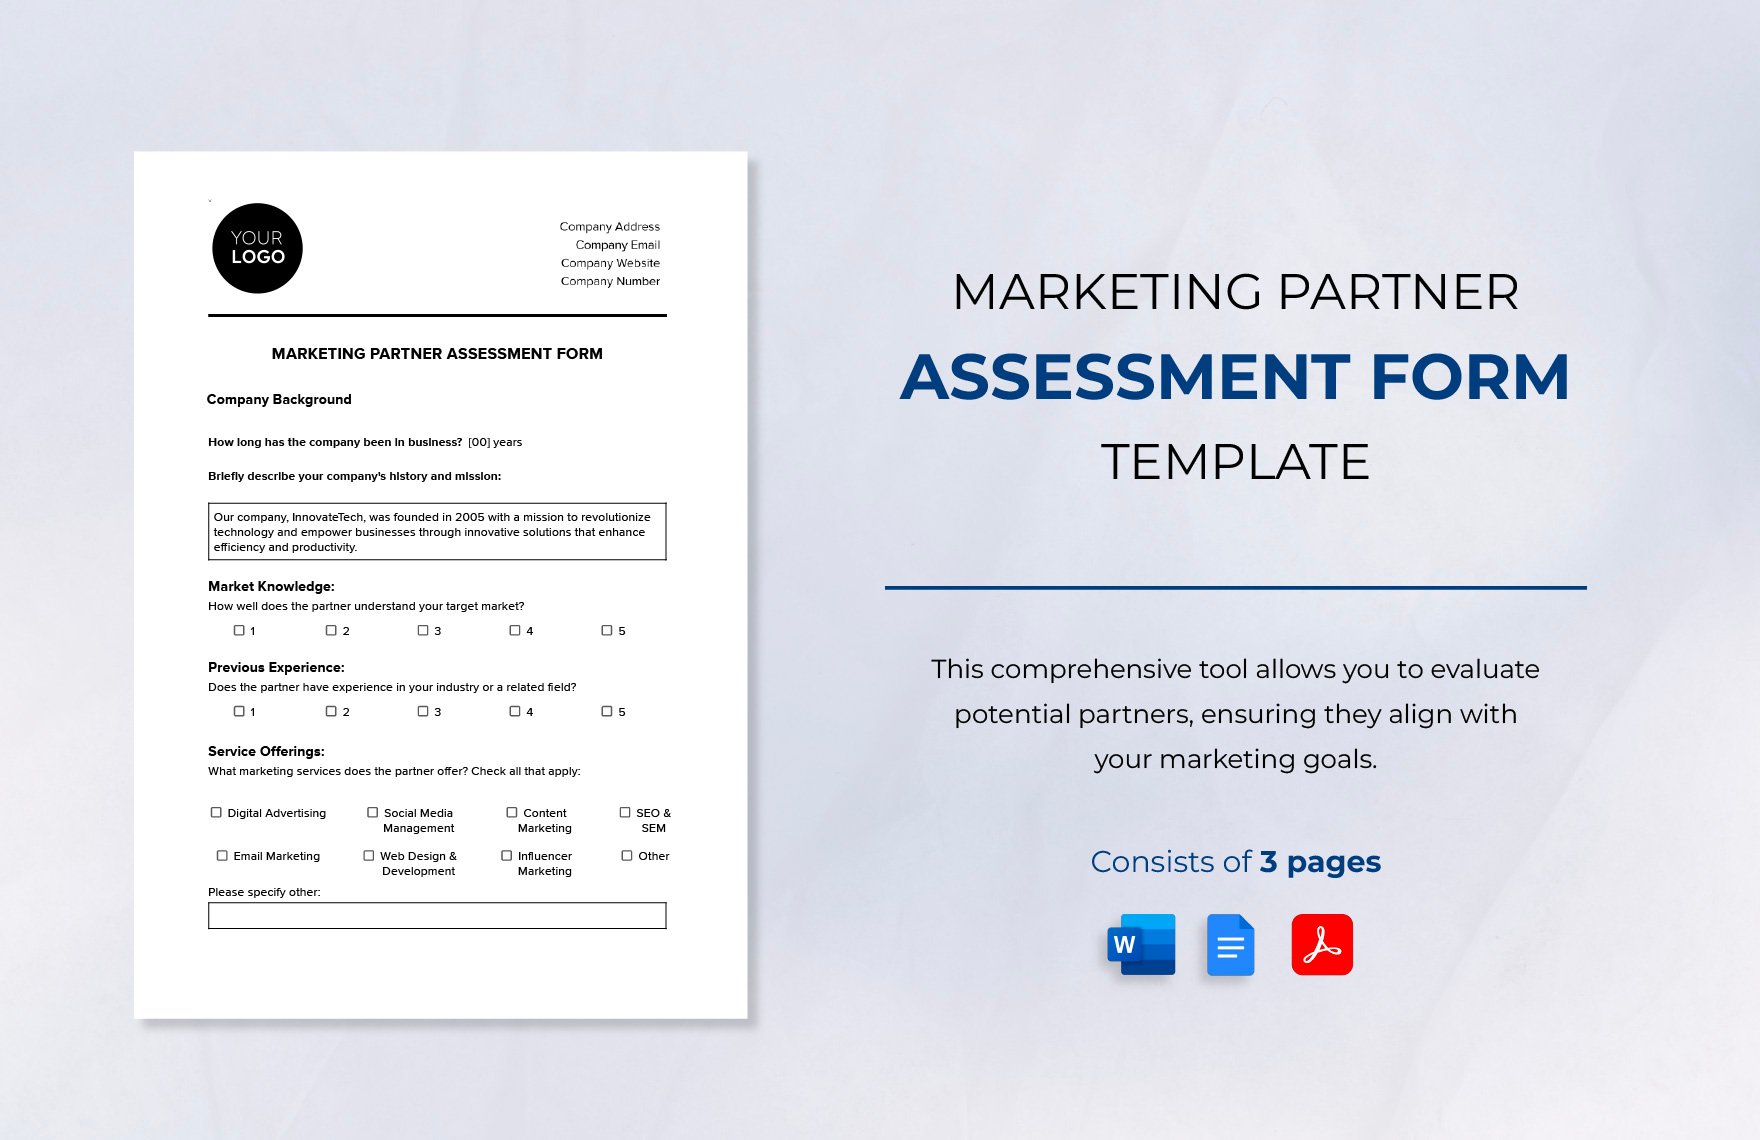 Marketing Partner Assessment Form Template in Word, Google Docs, PDF